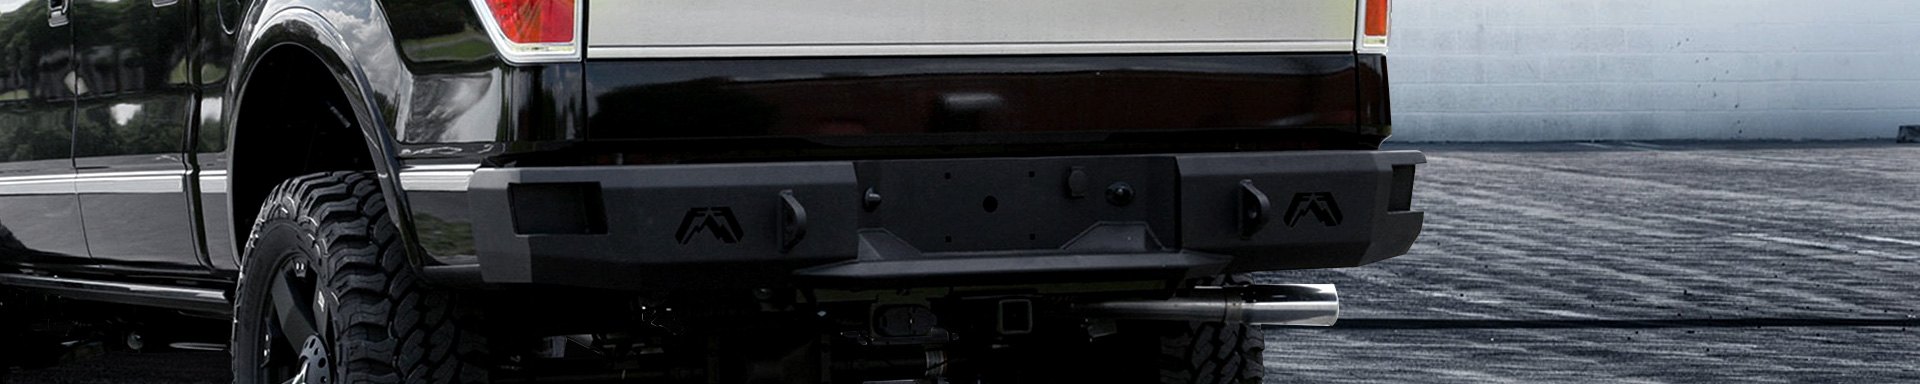 Fab Fours Introduced Premium Full Width Raw Rear HD Bumper for Ford F-150